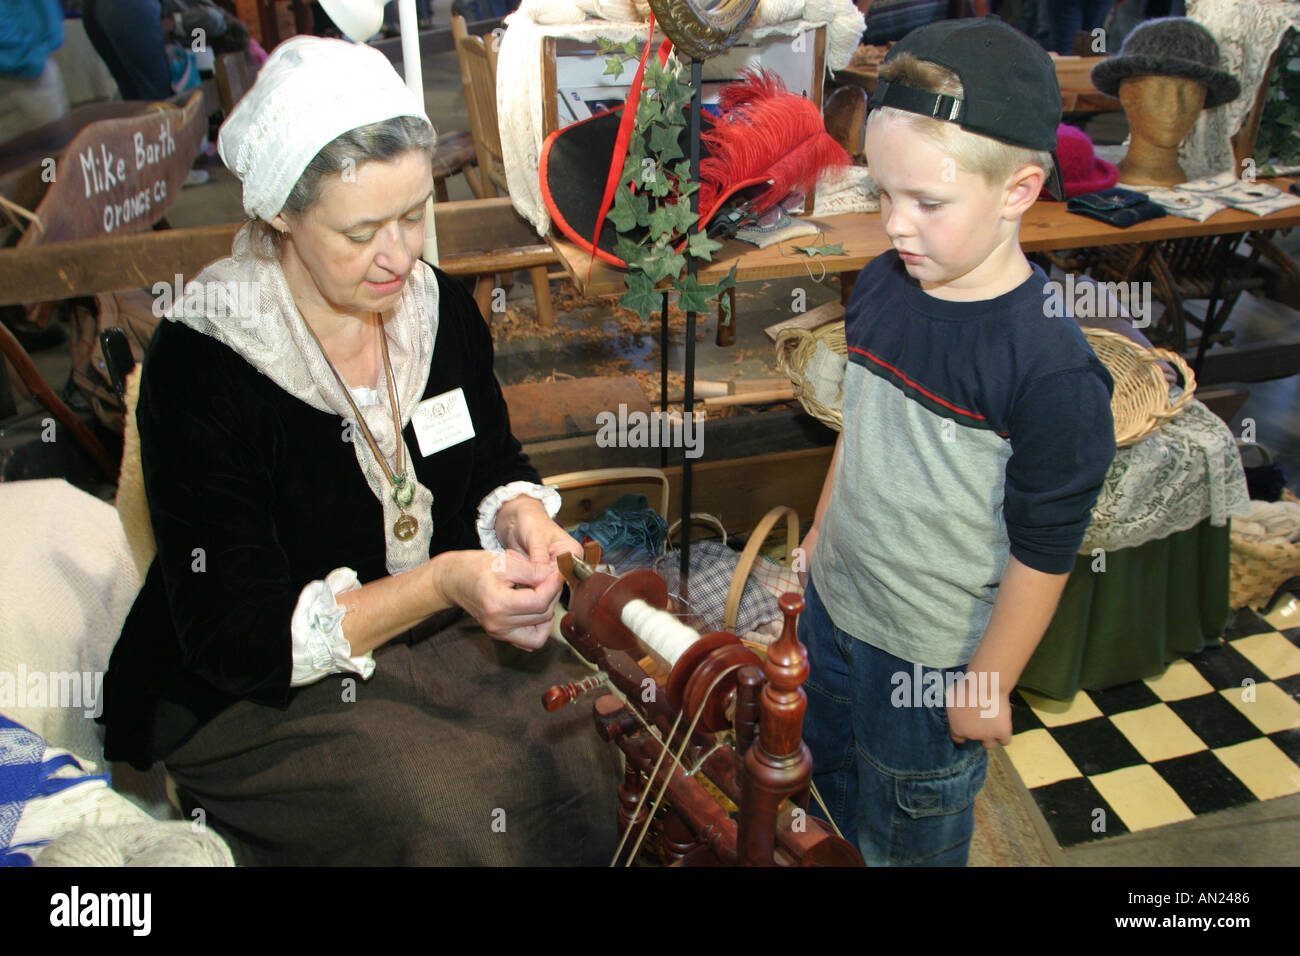 Raleigh North Carolina,North Carolina State Fair,Village of Yesteryear,tradition,arts & crafts,creative,handiwork,skills,weaving,spinning,natural dyei Stock Photo